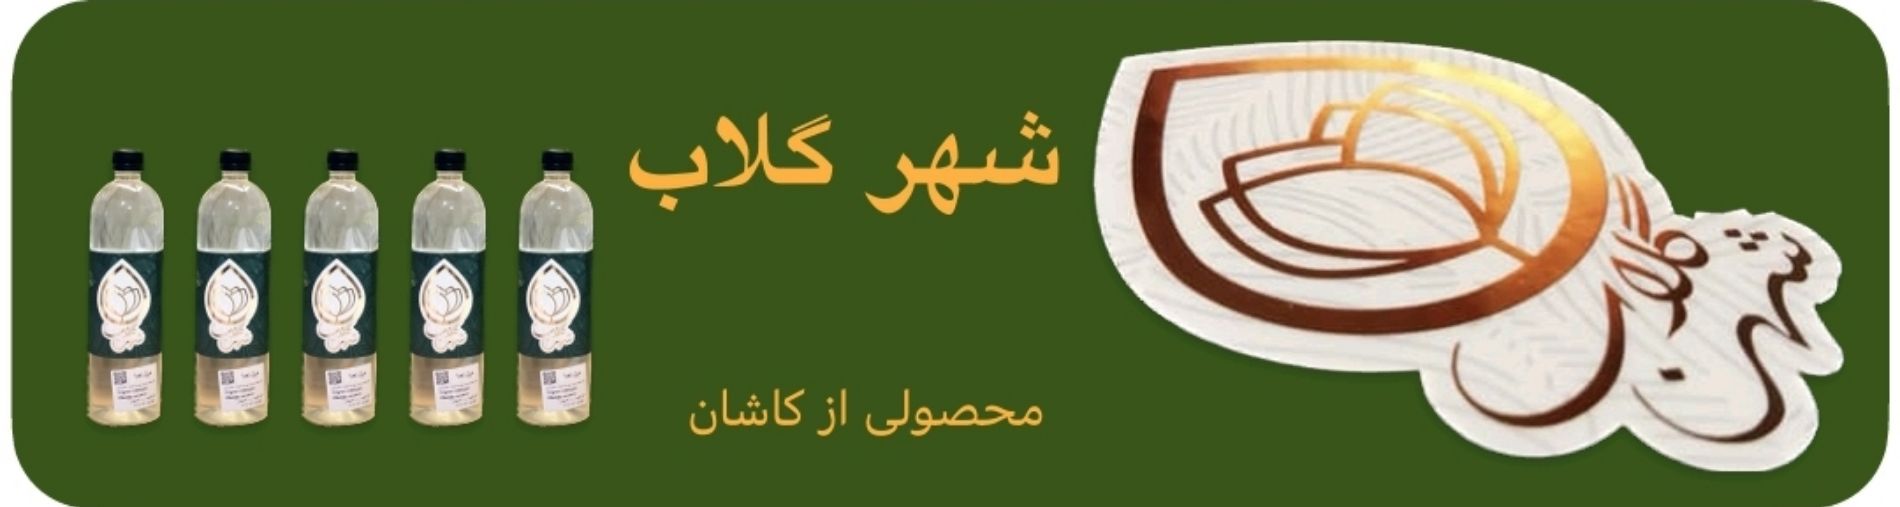 desktop banner فروشگاه شهر گلاب